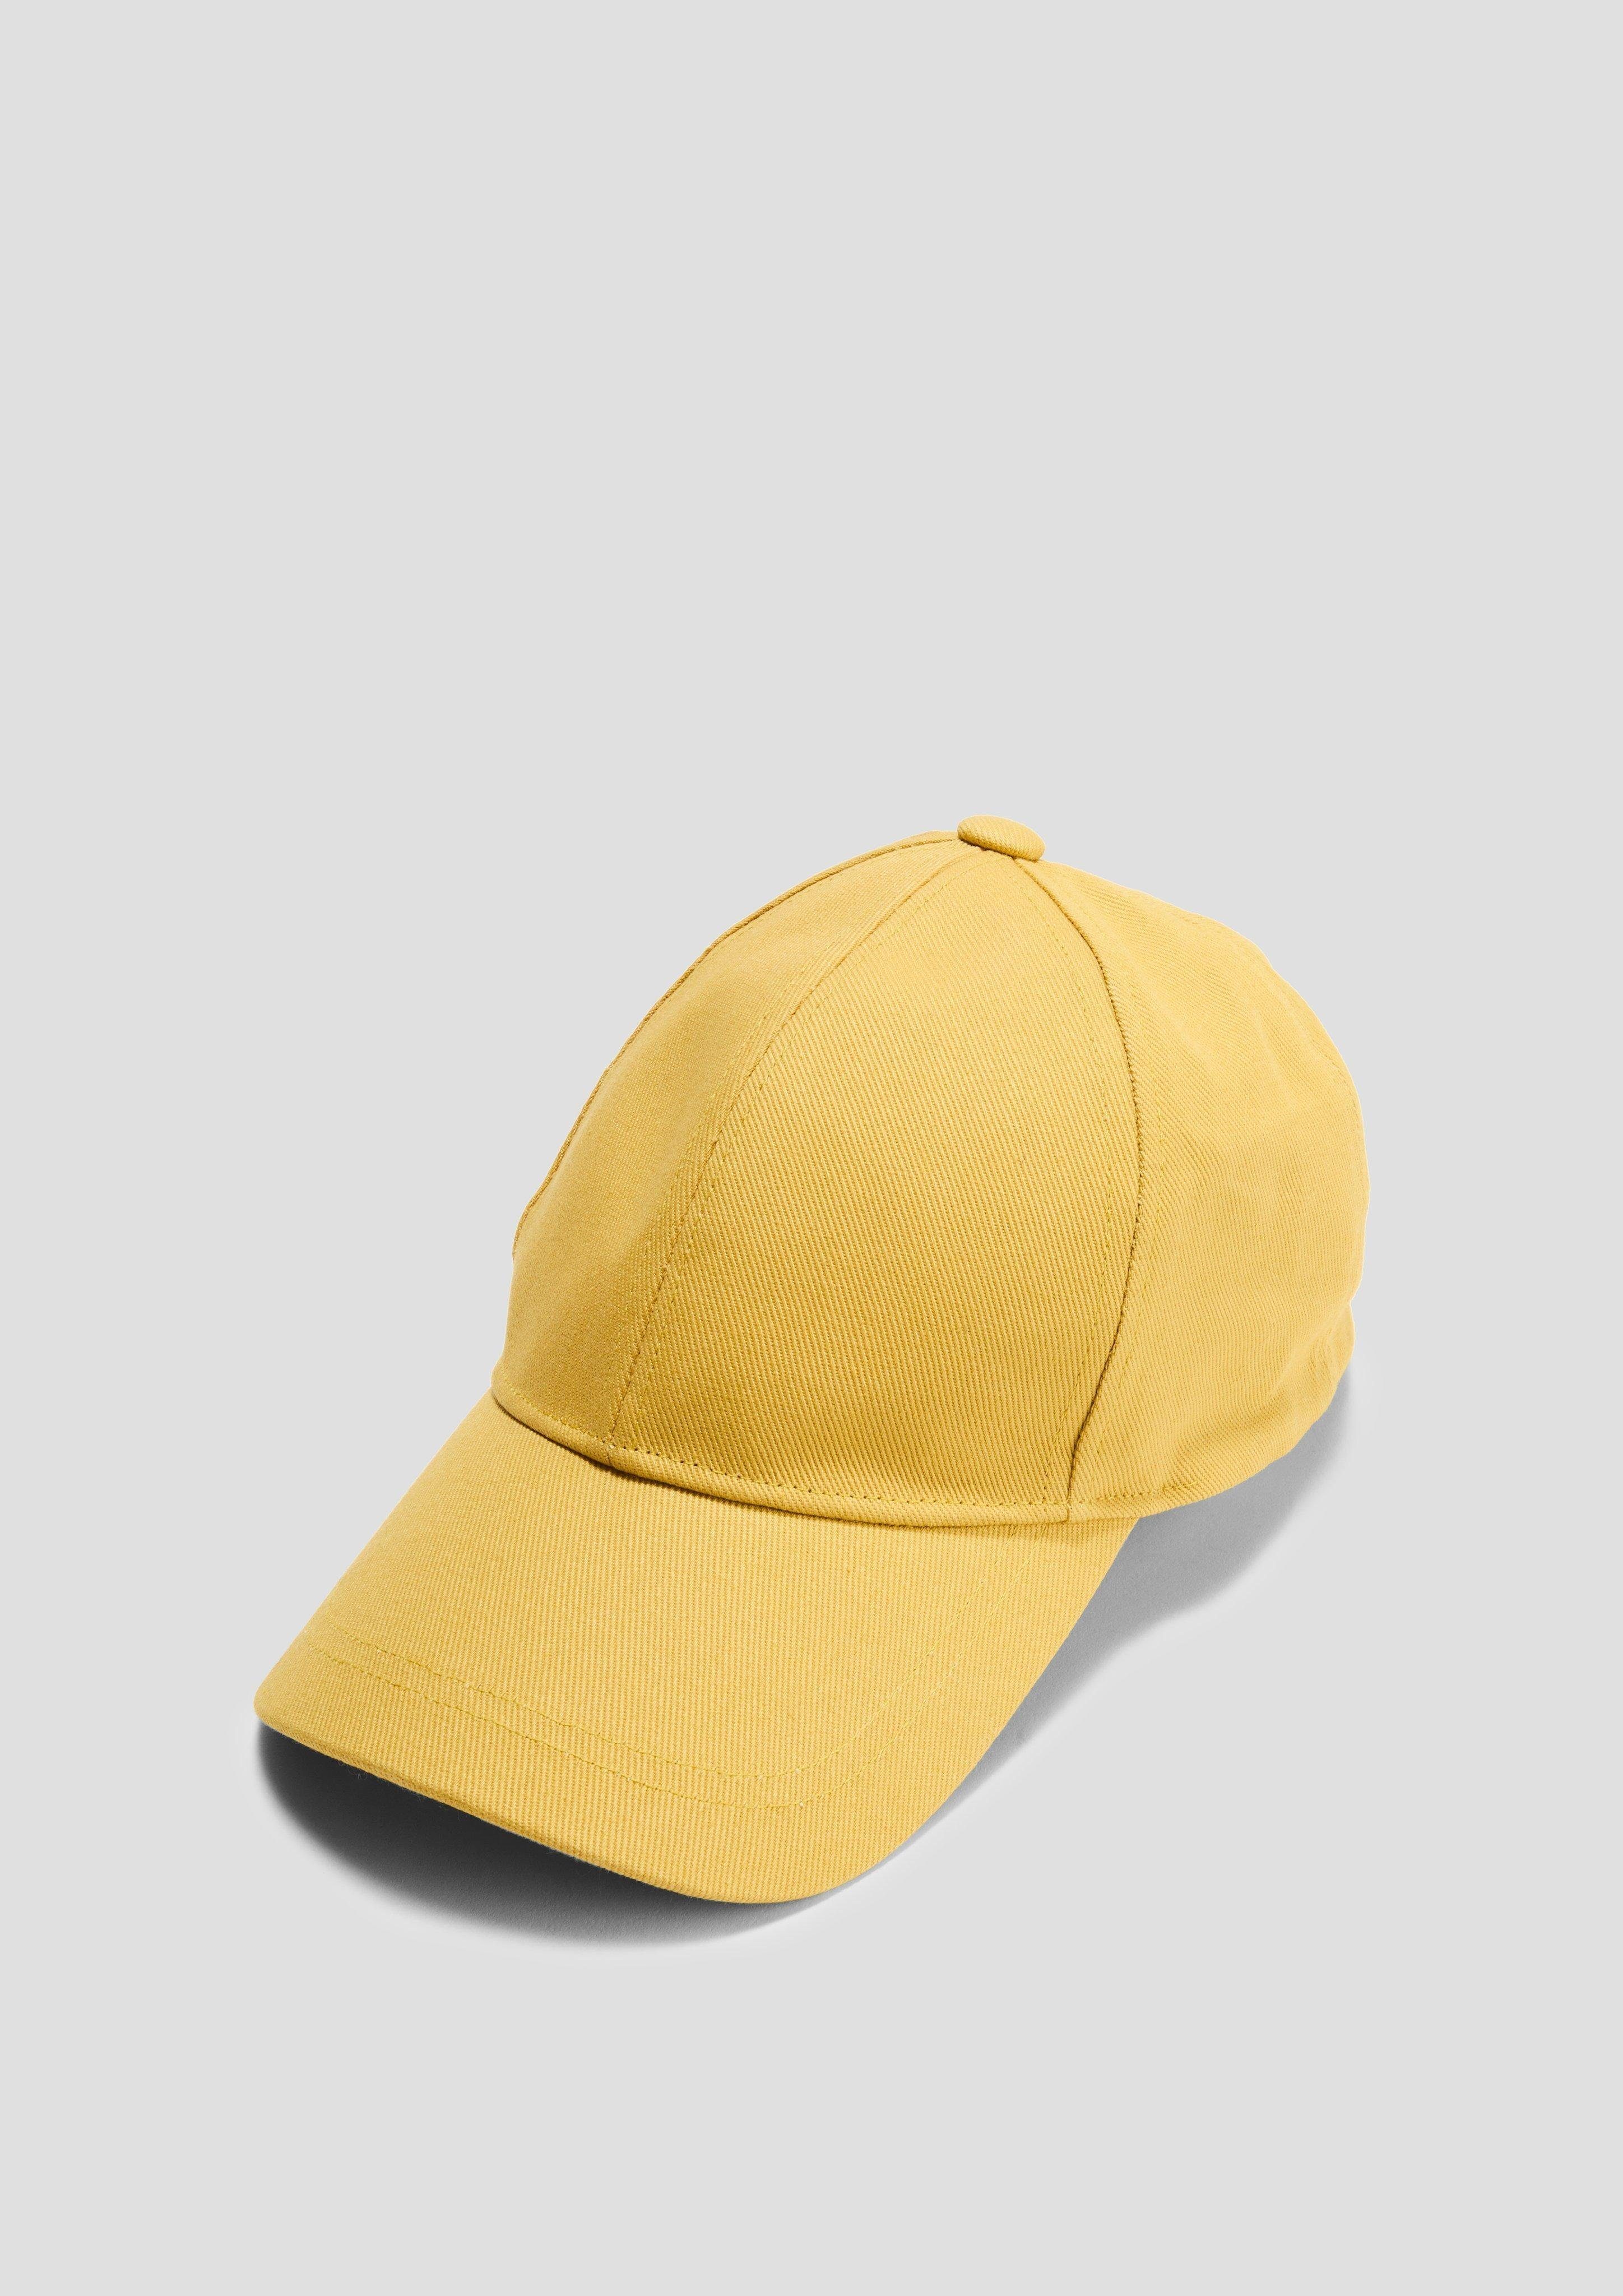 s.Oliver Baseball Cap Kappe aus Twill gelb